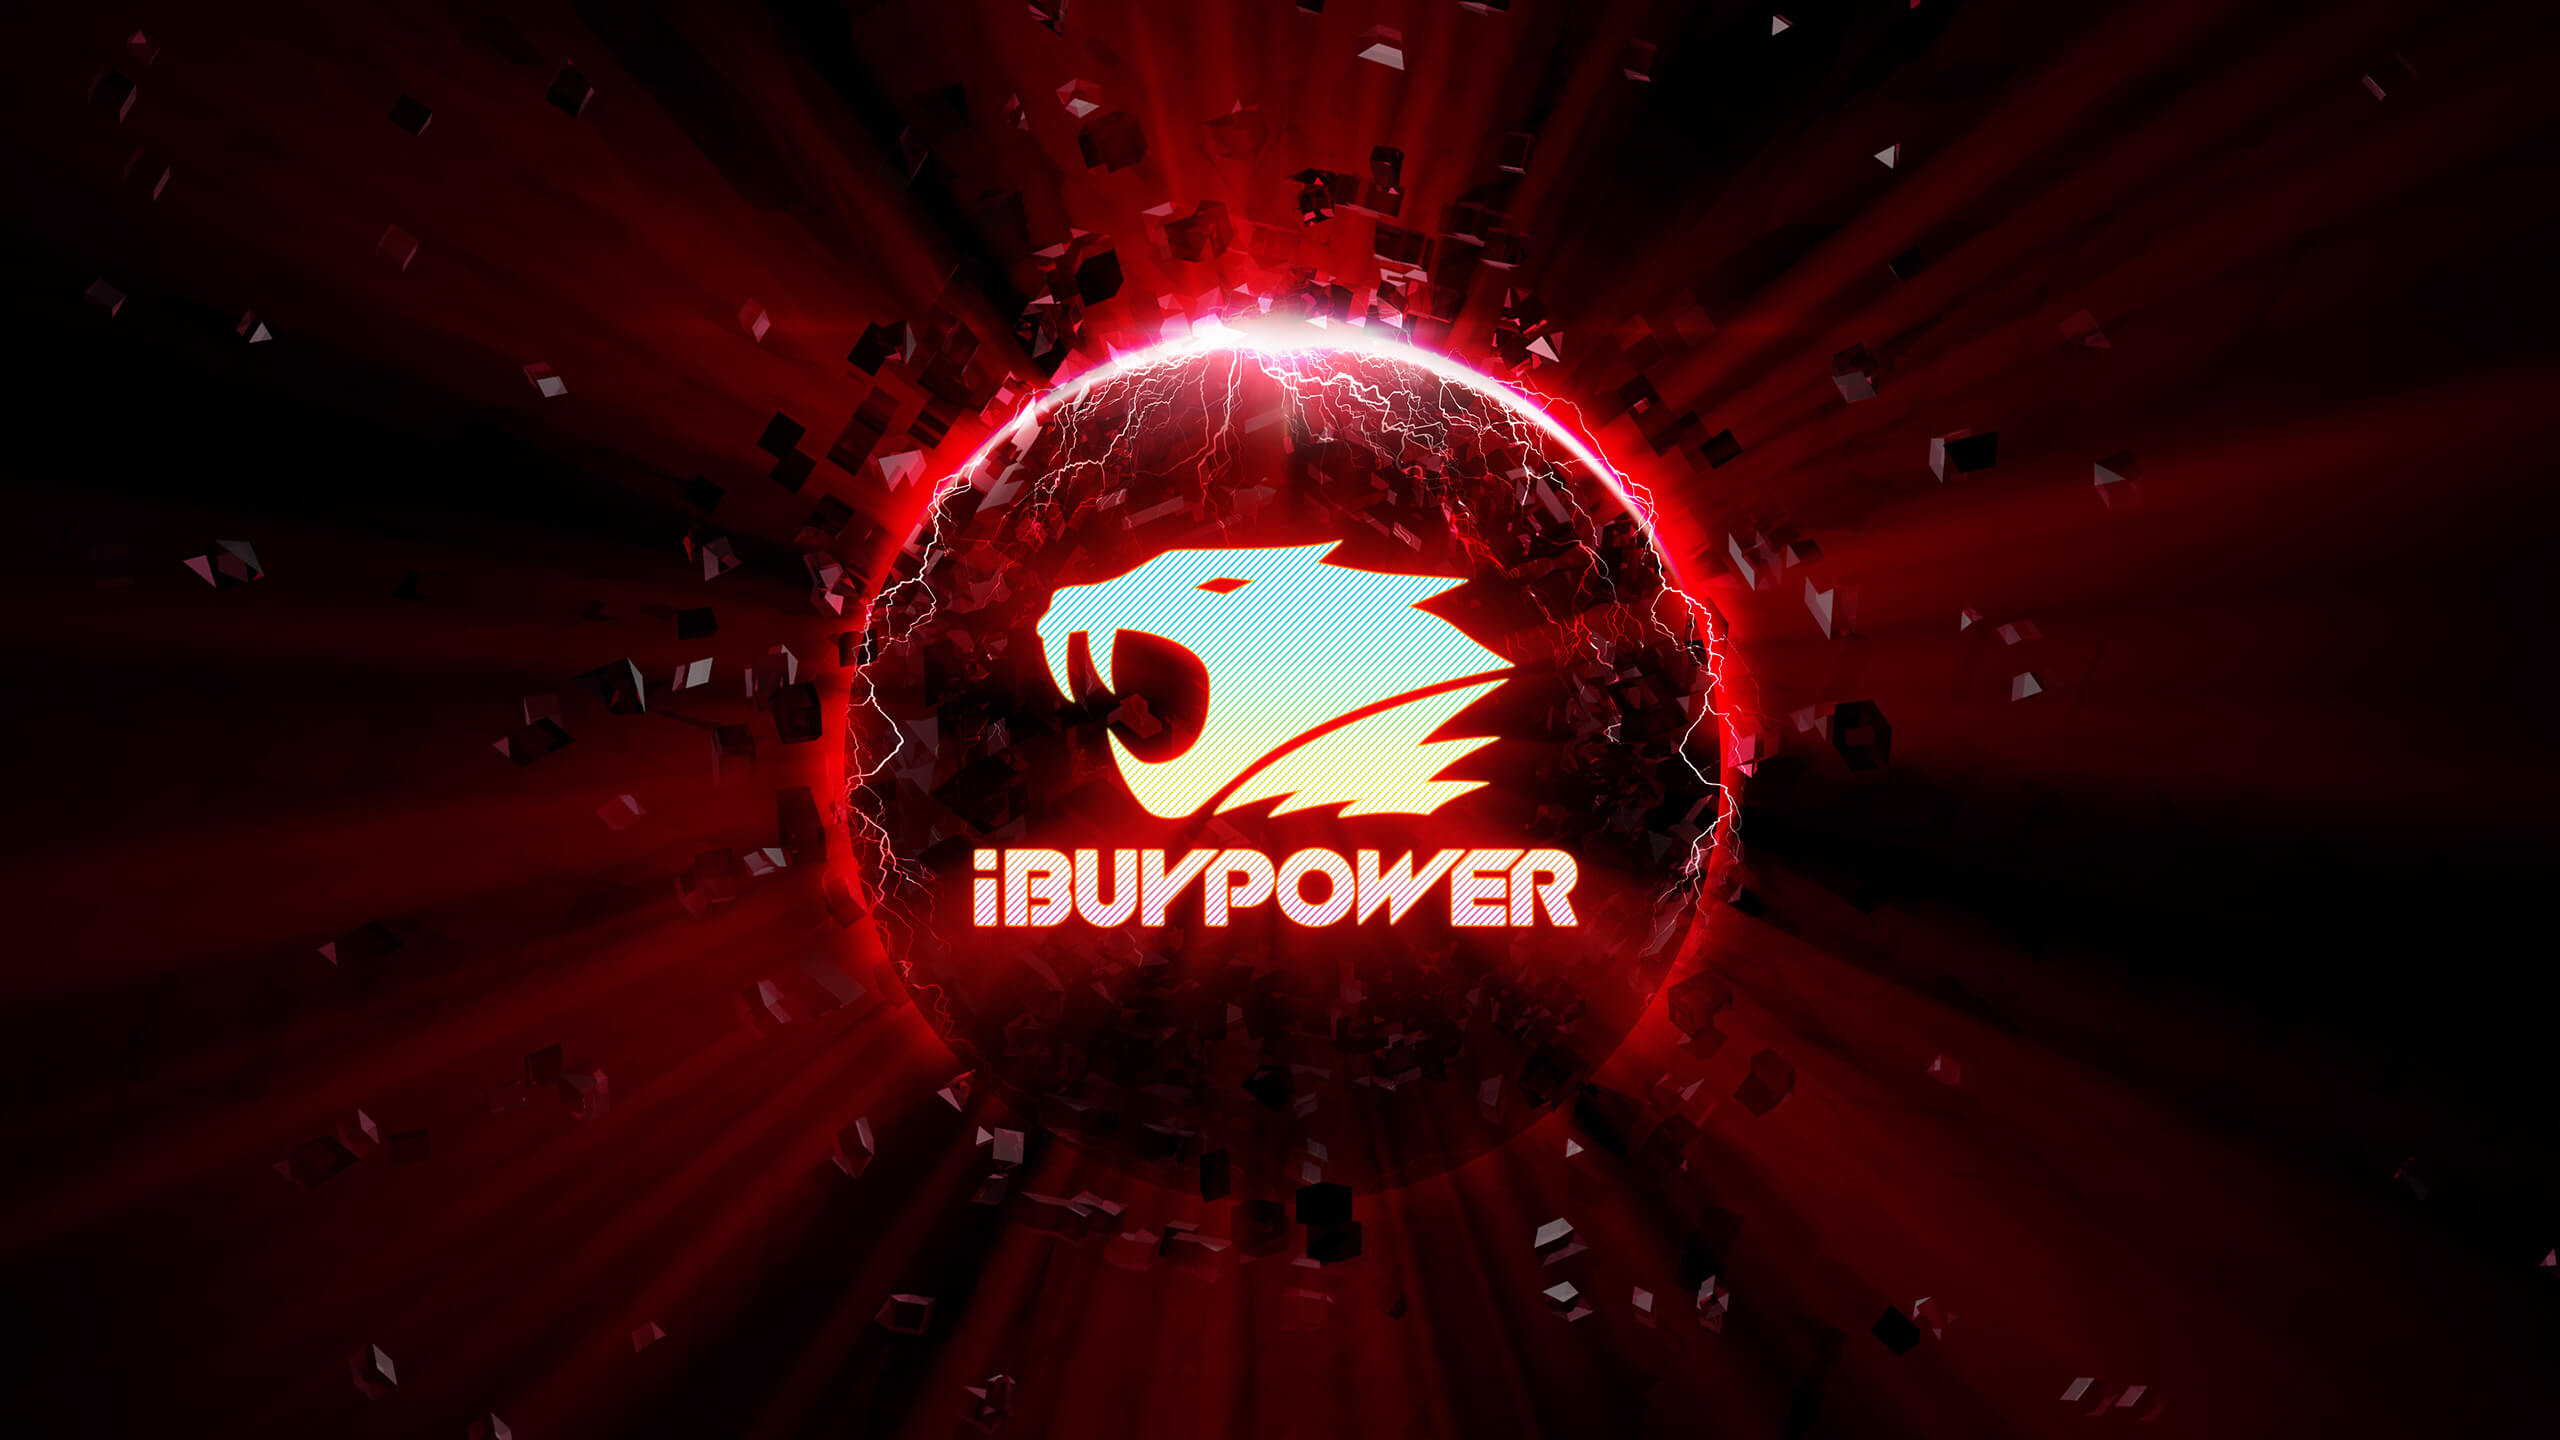 Ibuypower - HD Wallpaper 